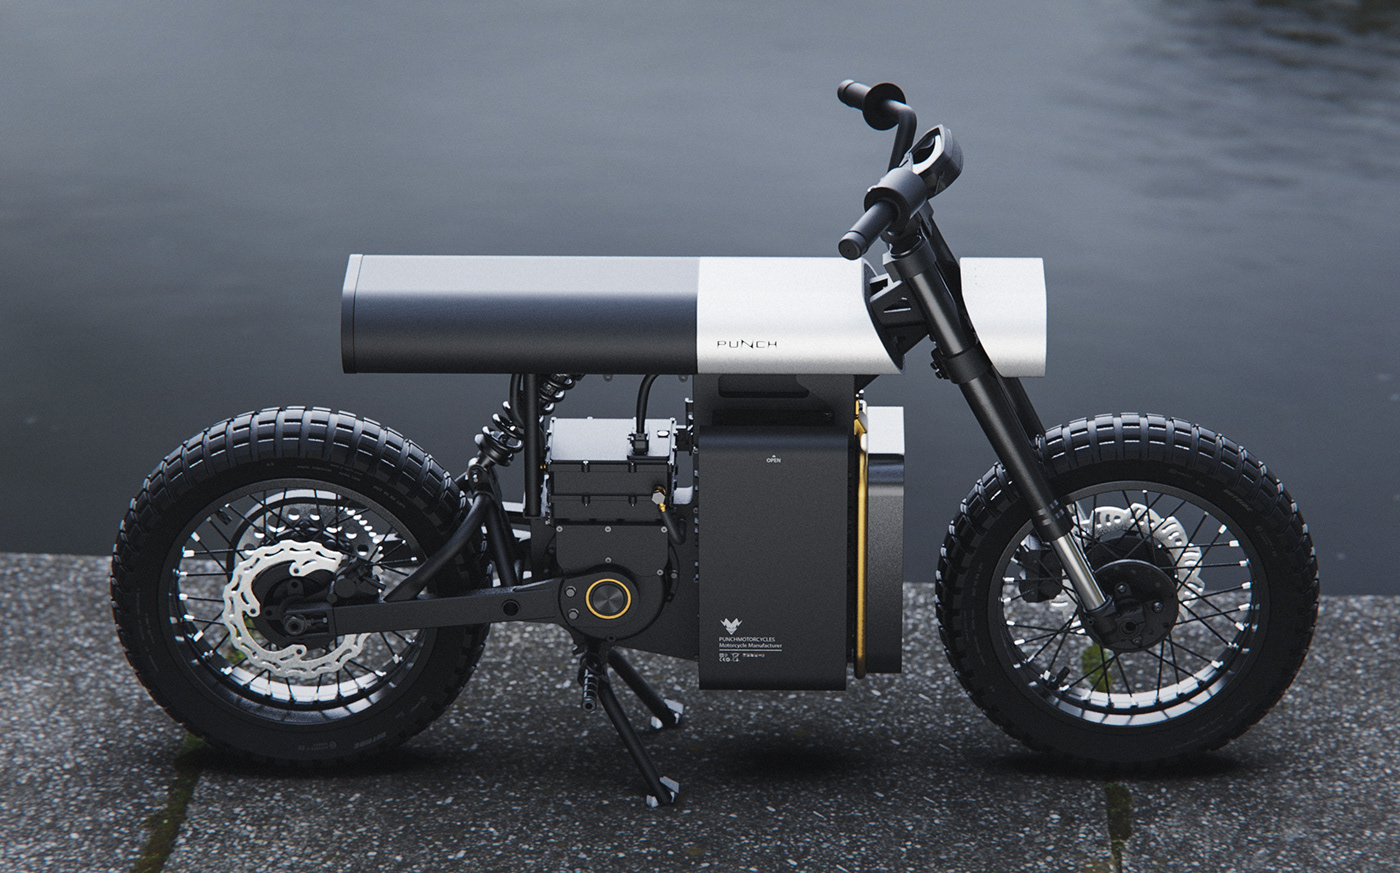 Bike Ebike electric motorcycle emotorcycle motorcycle punch smirnov artem